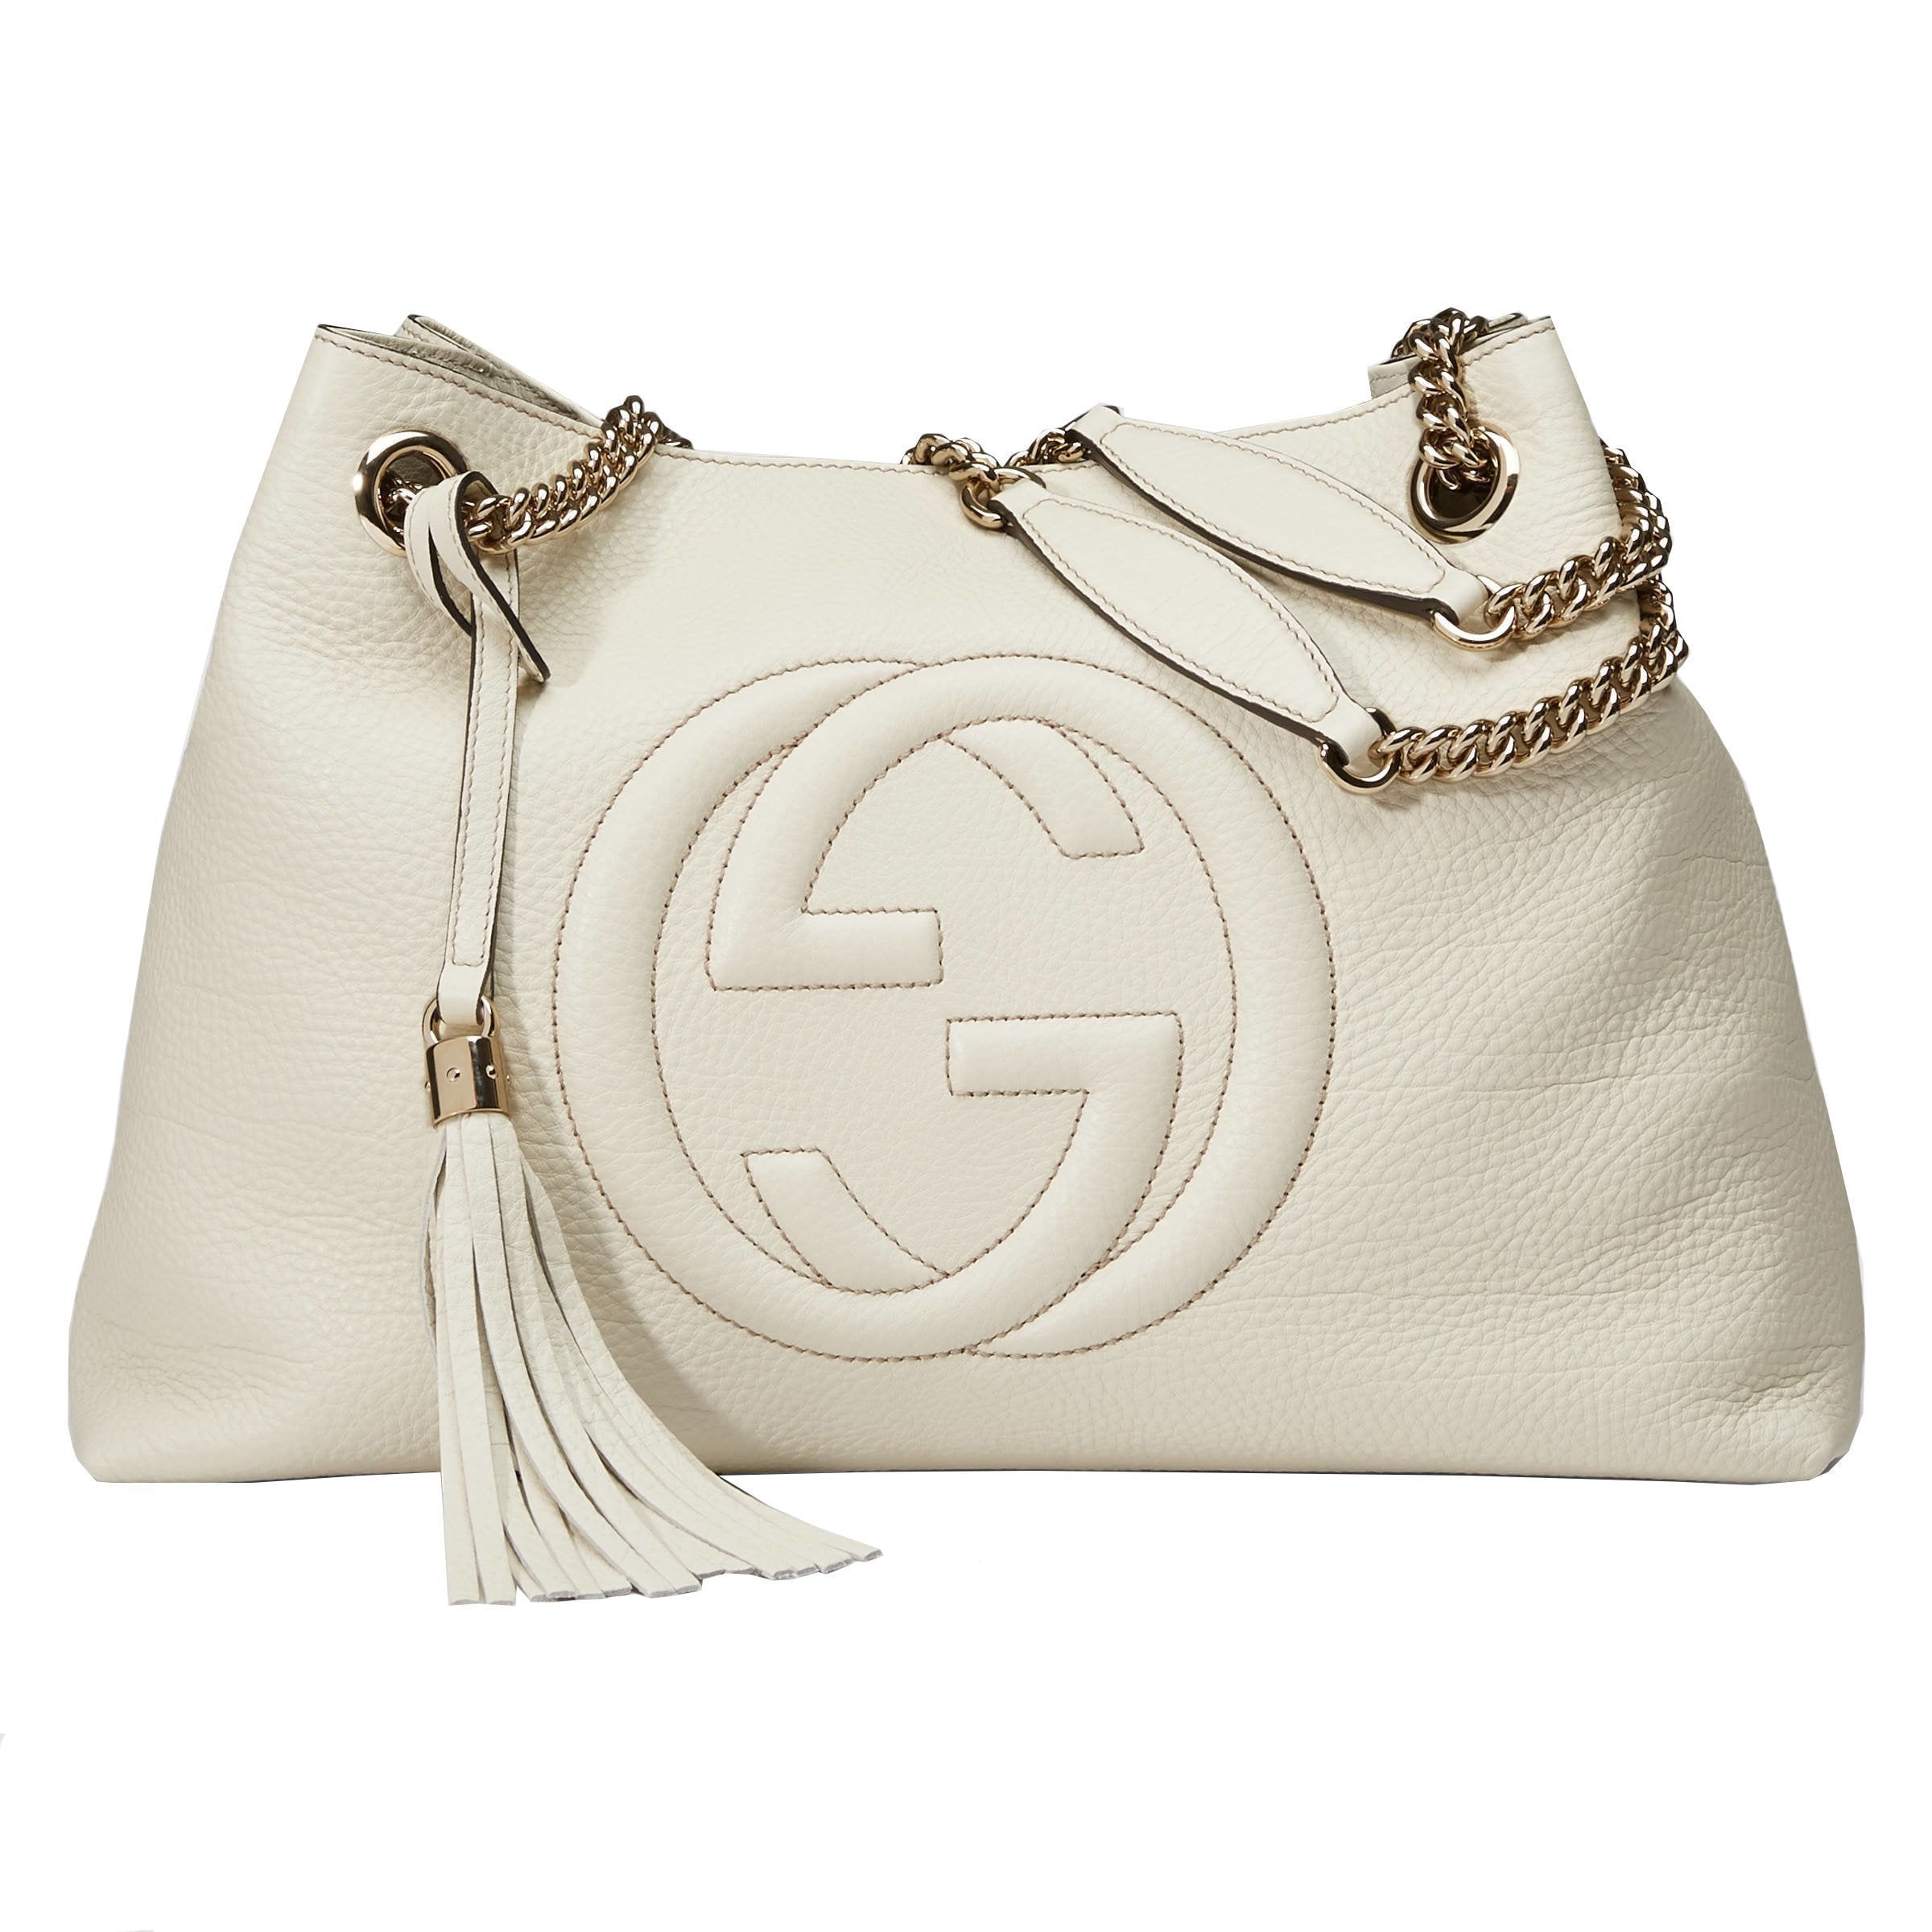 Gucci Soho GG Ivory Leather Chain Shoulder Bag 536196 - Walmart.com